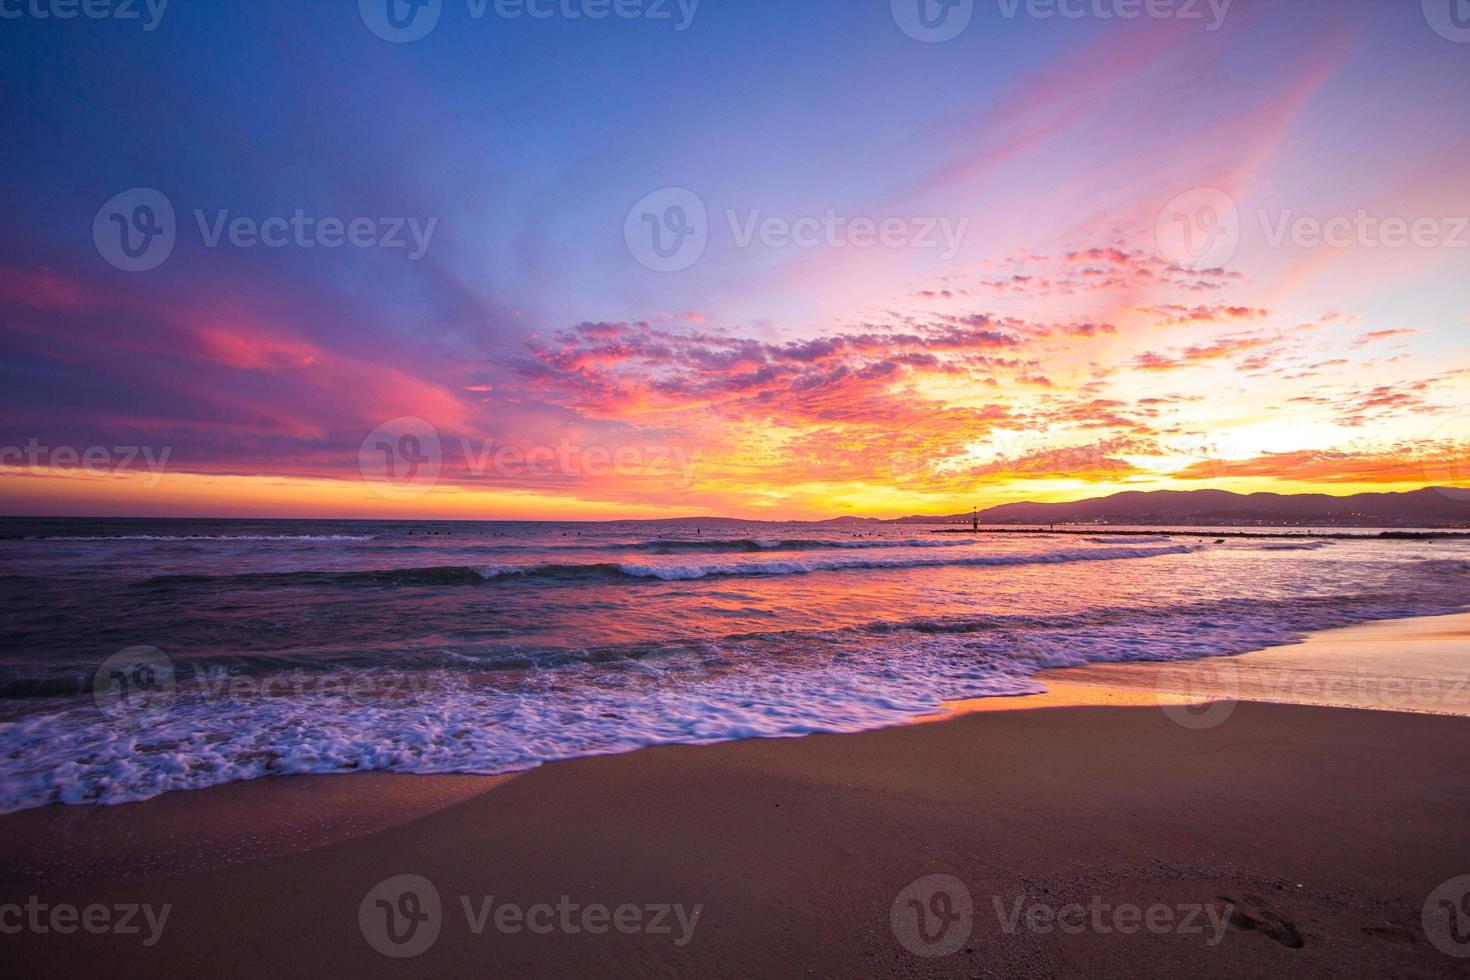 pôr do sol tropical areia praia mar tece palm guarda-chuva maiorca mallorca foto